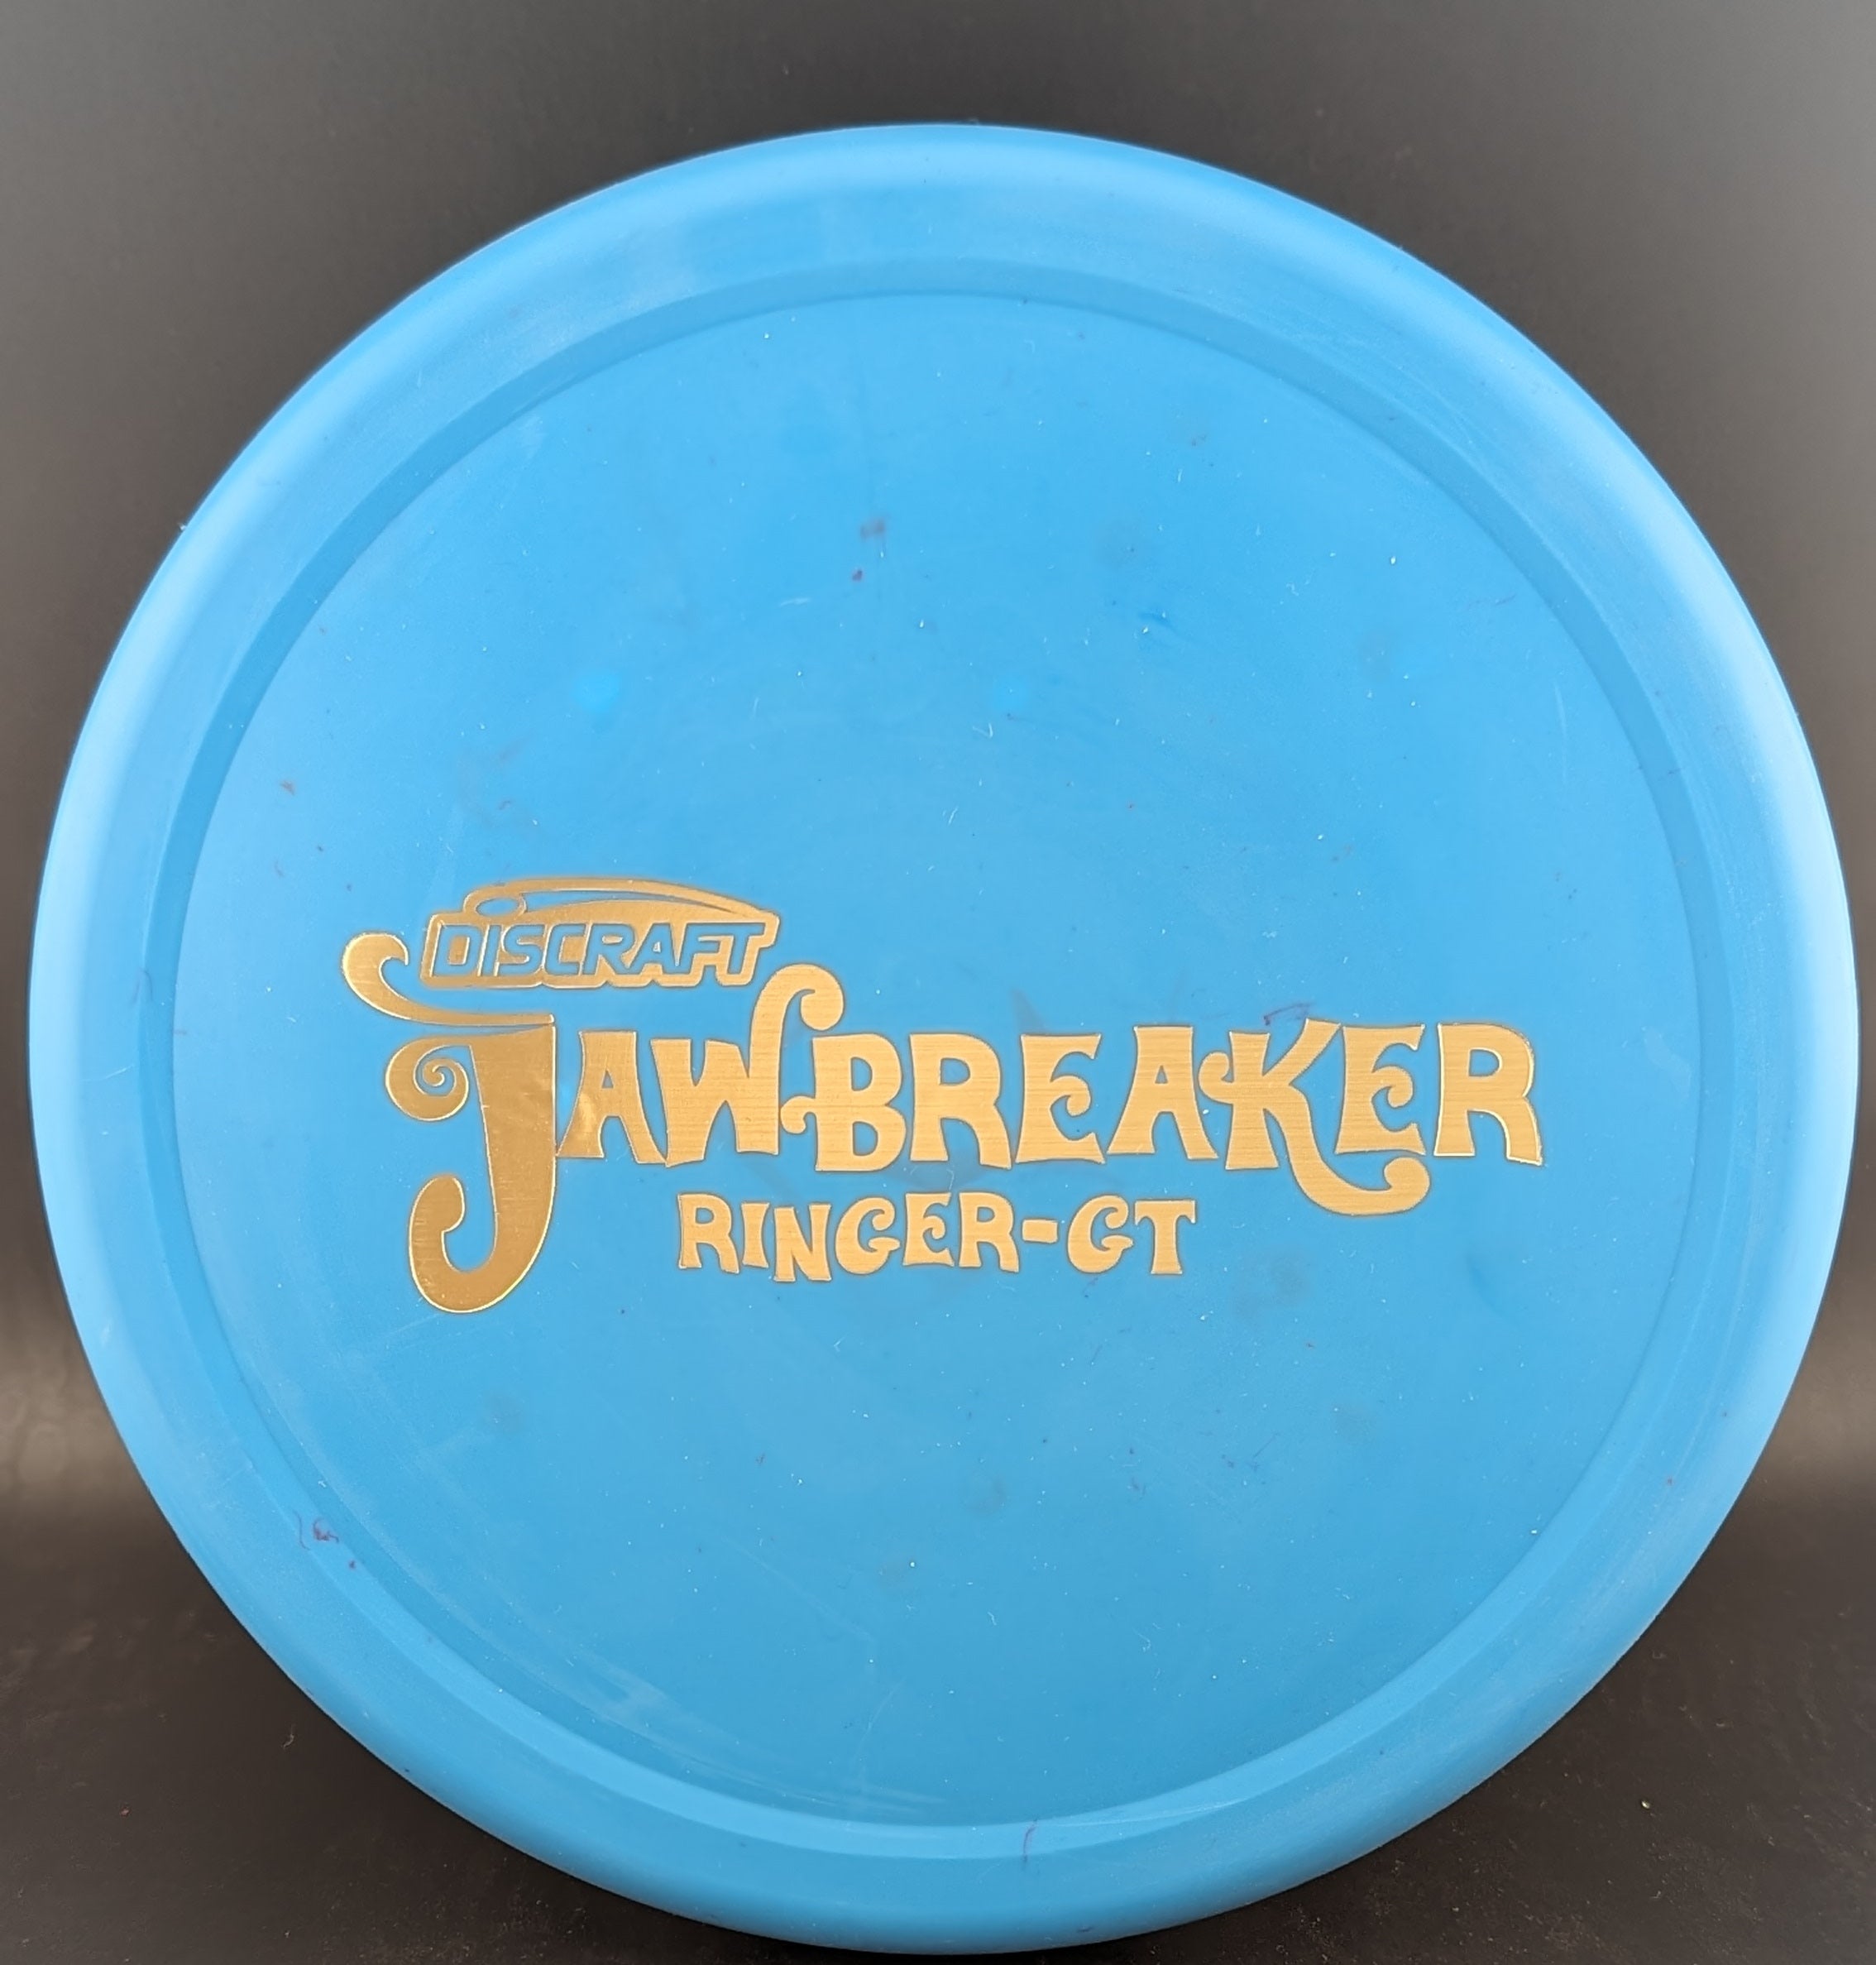 Discraft Jawbreaker Ringer GT